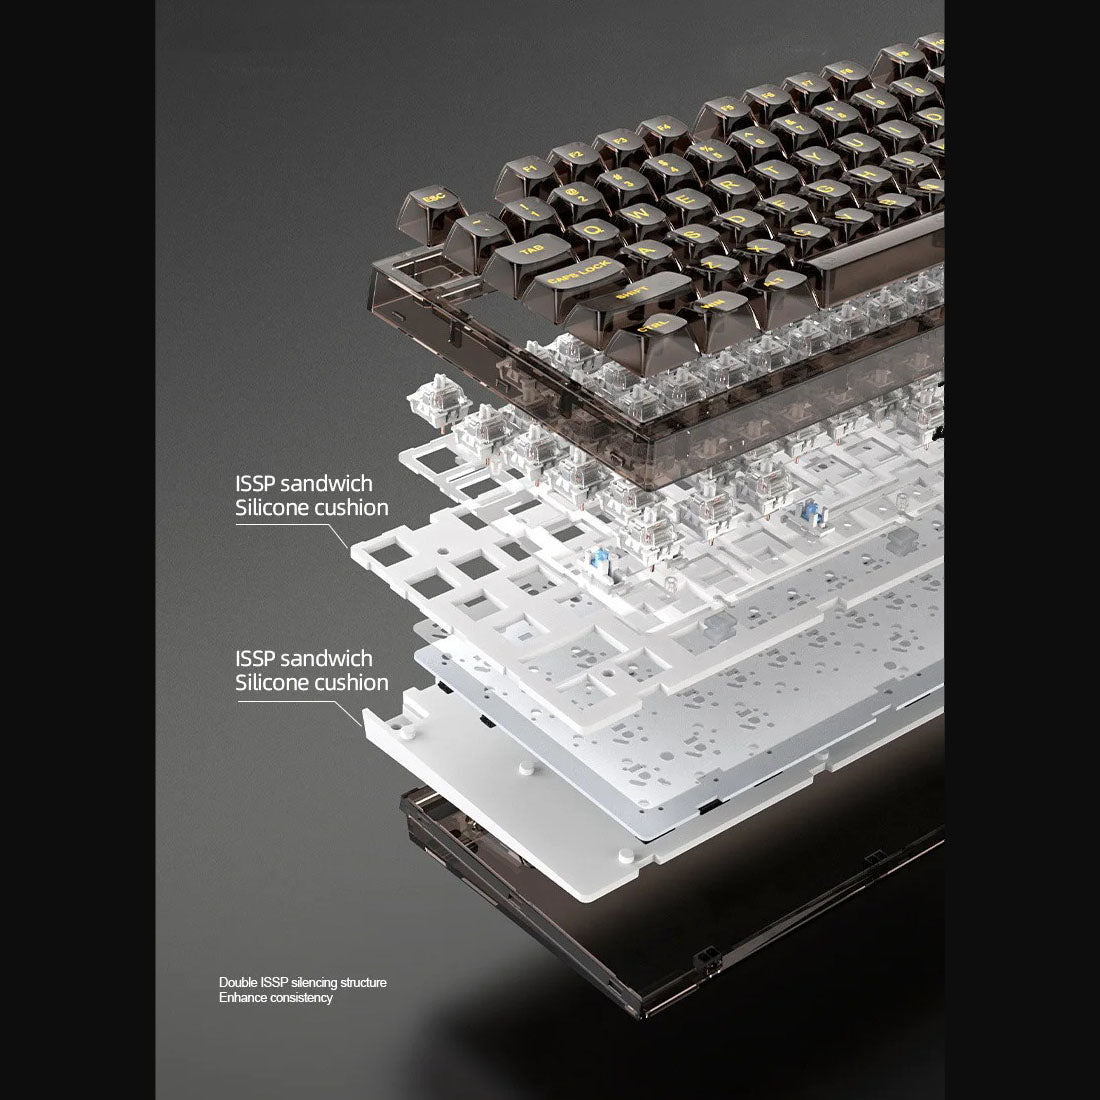 Xinmeng X75 Transparent Mechanical Keyboard